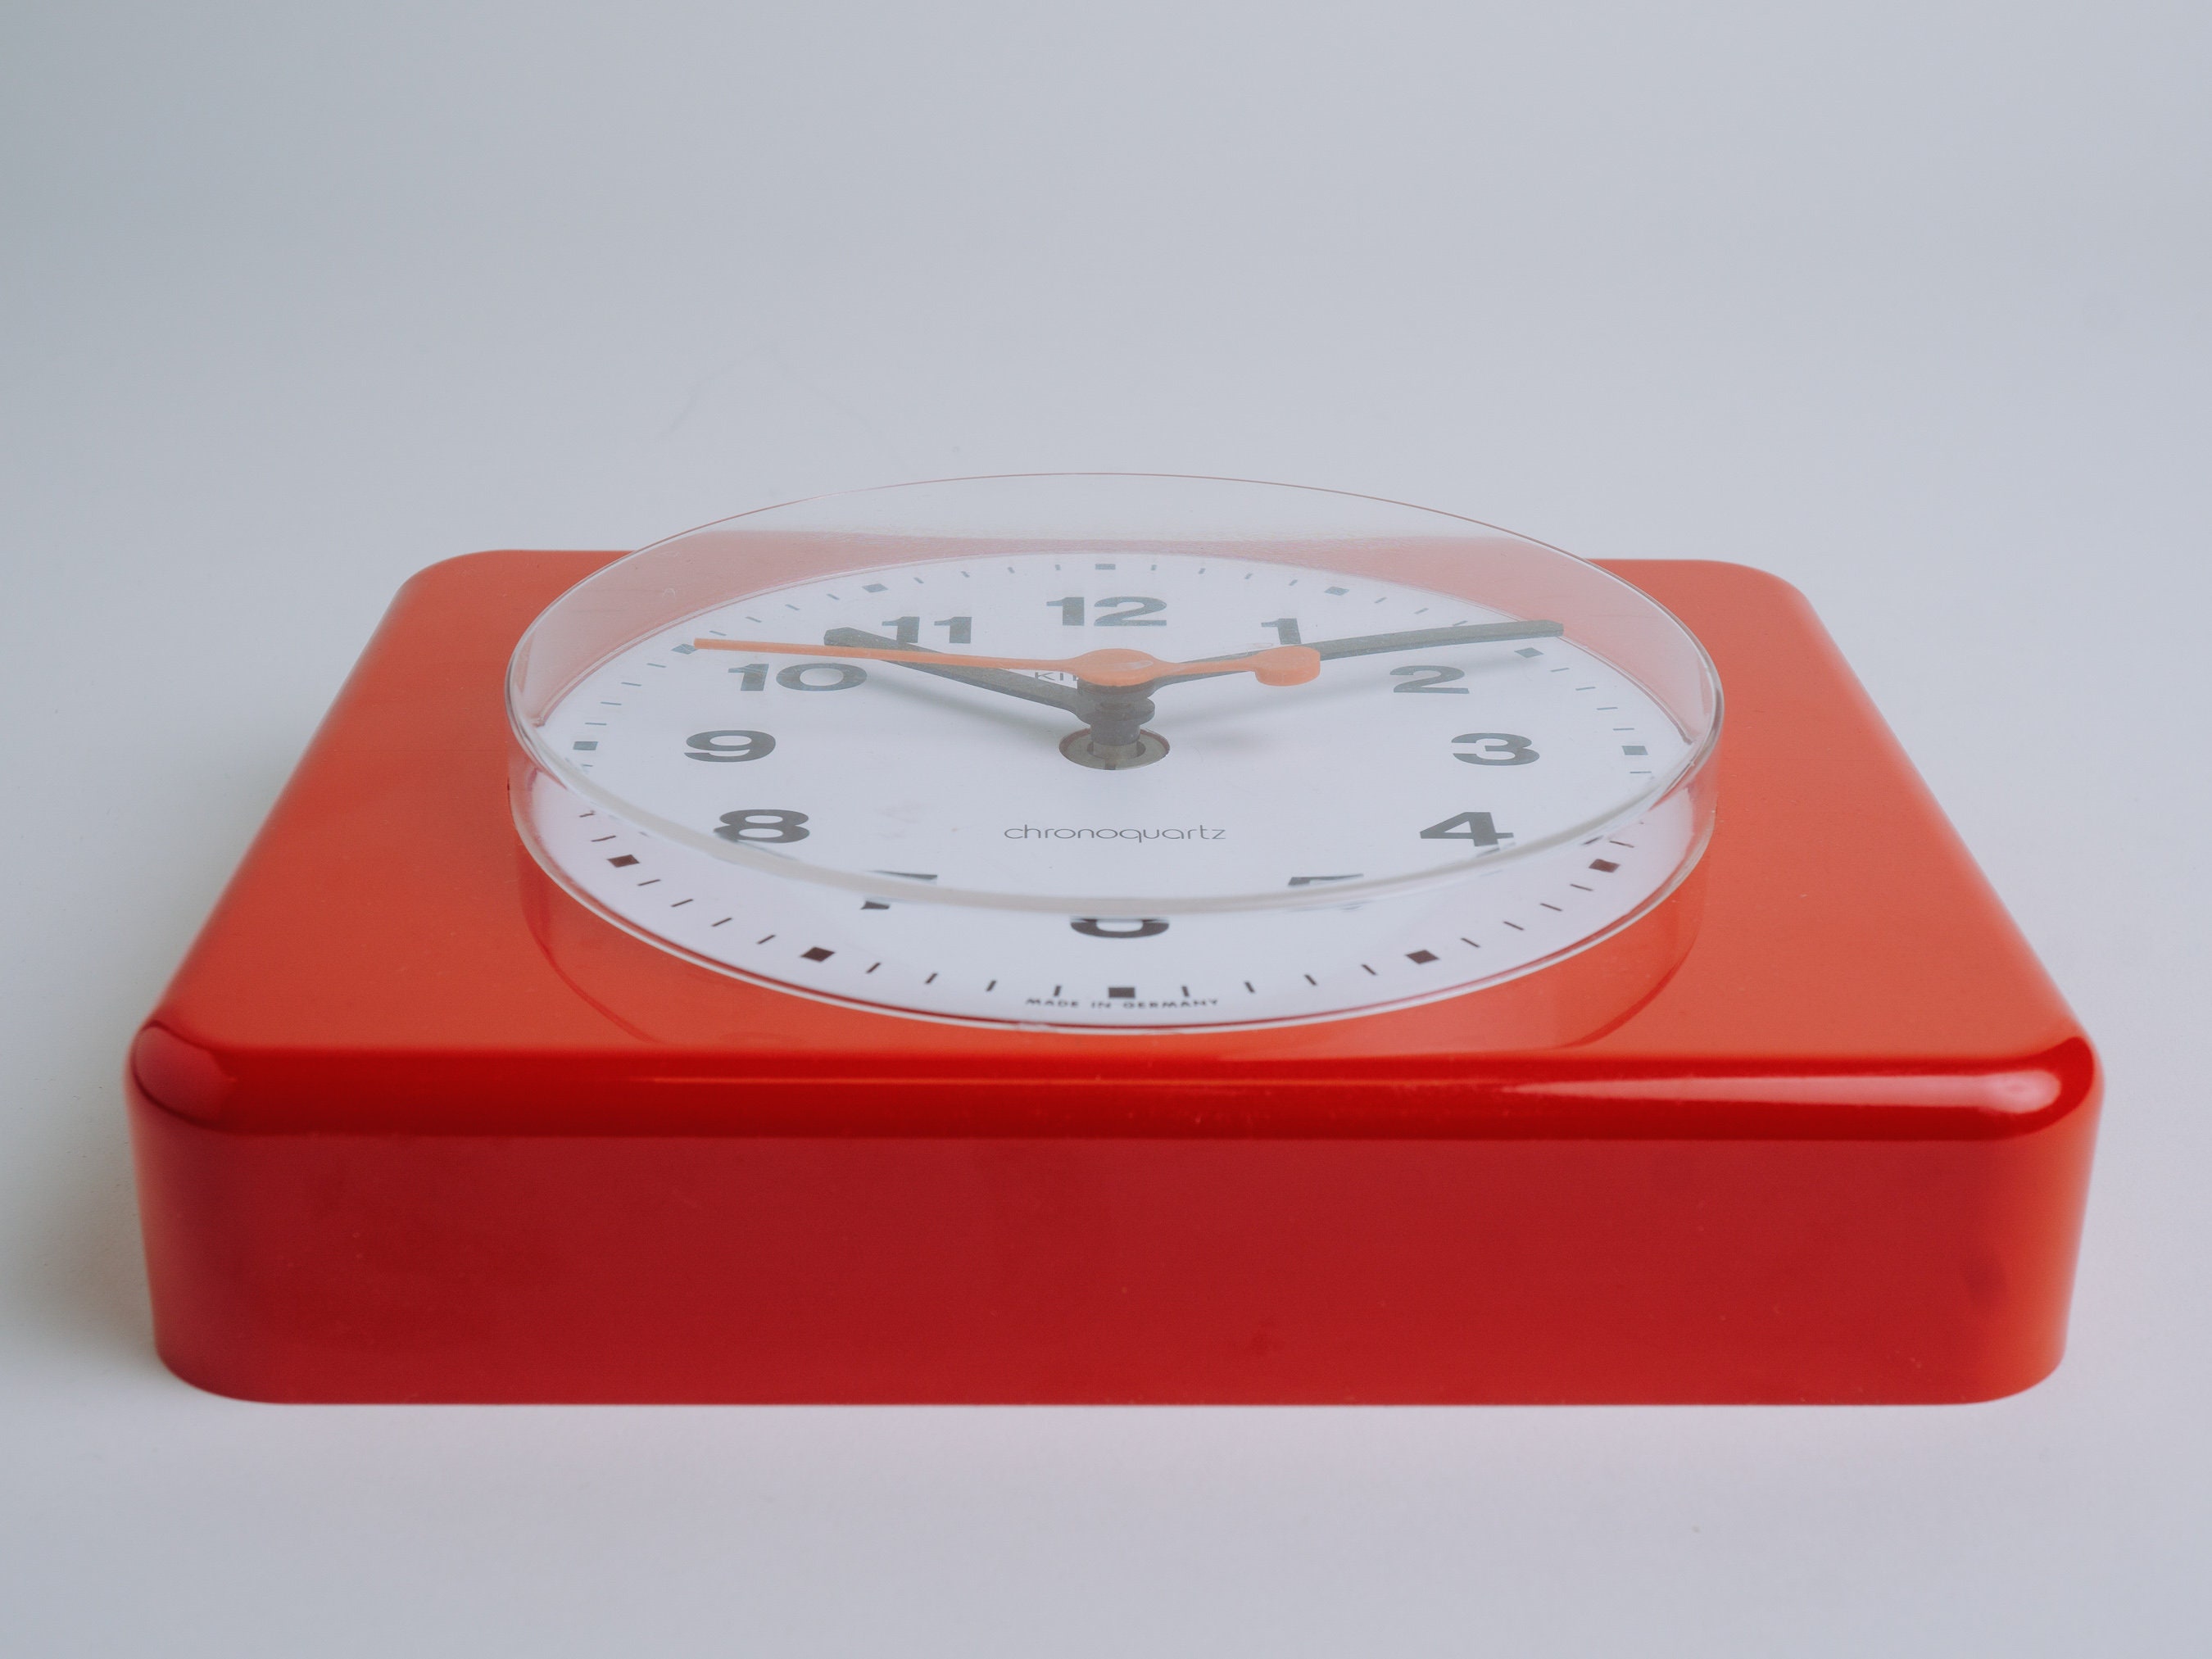 Red Retro Timer Clock